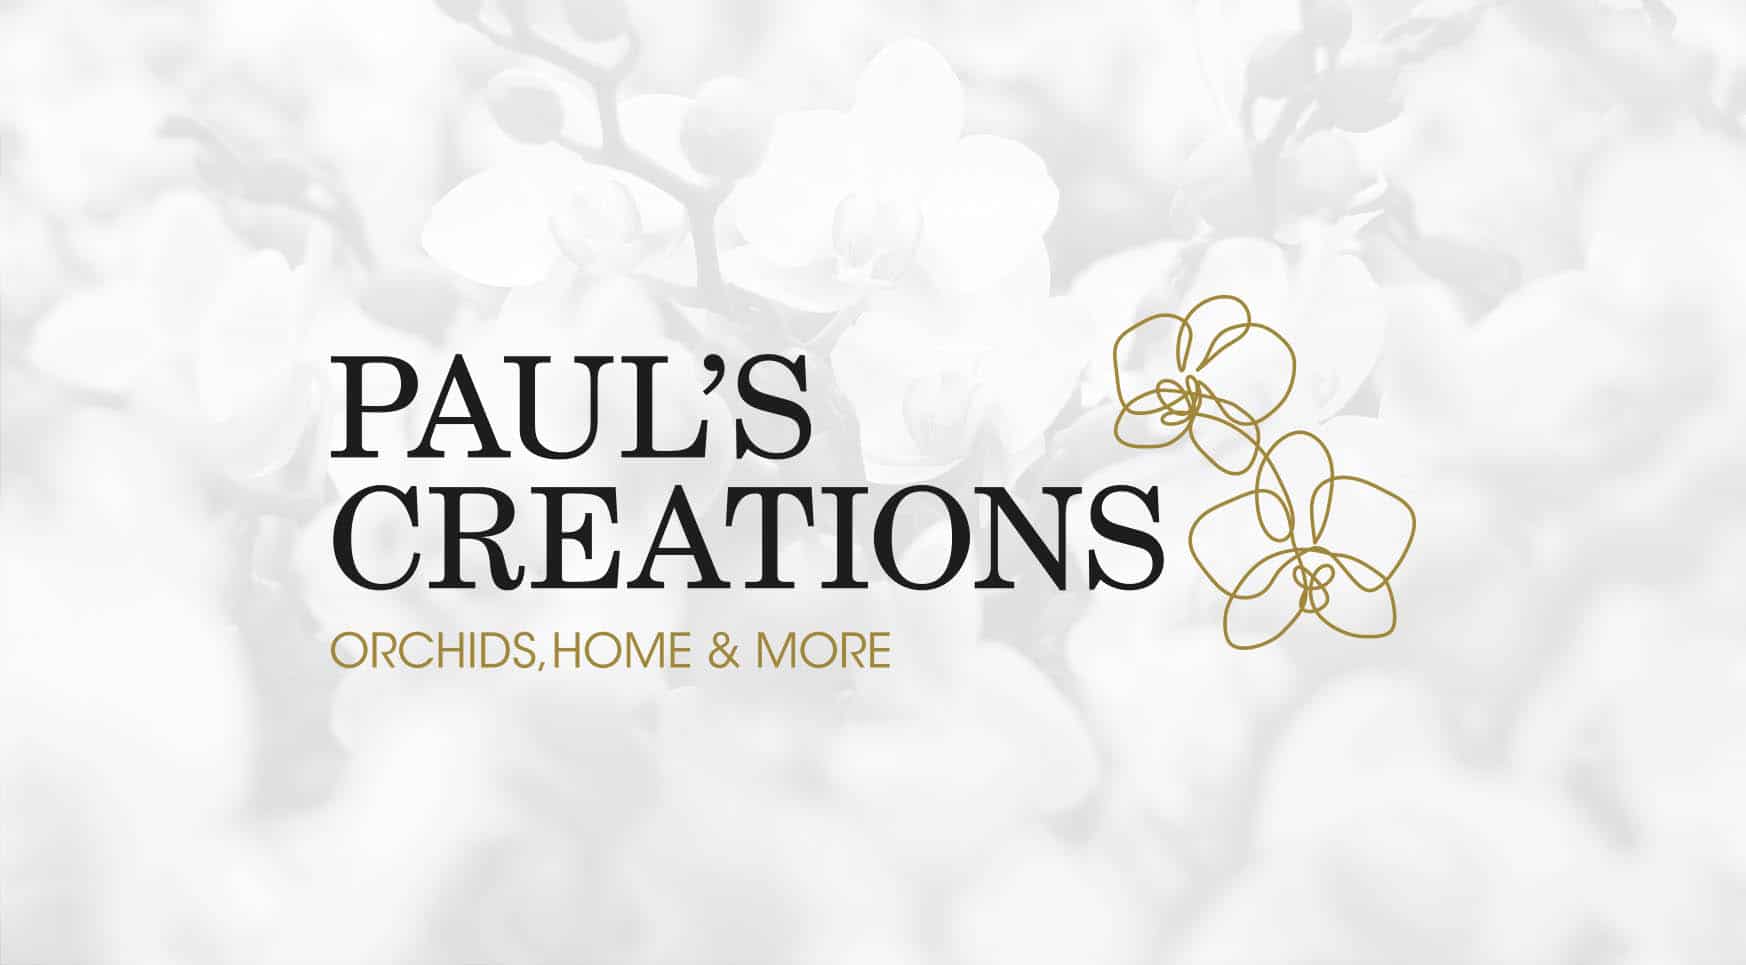 PaulsCreations